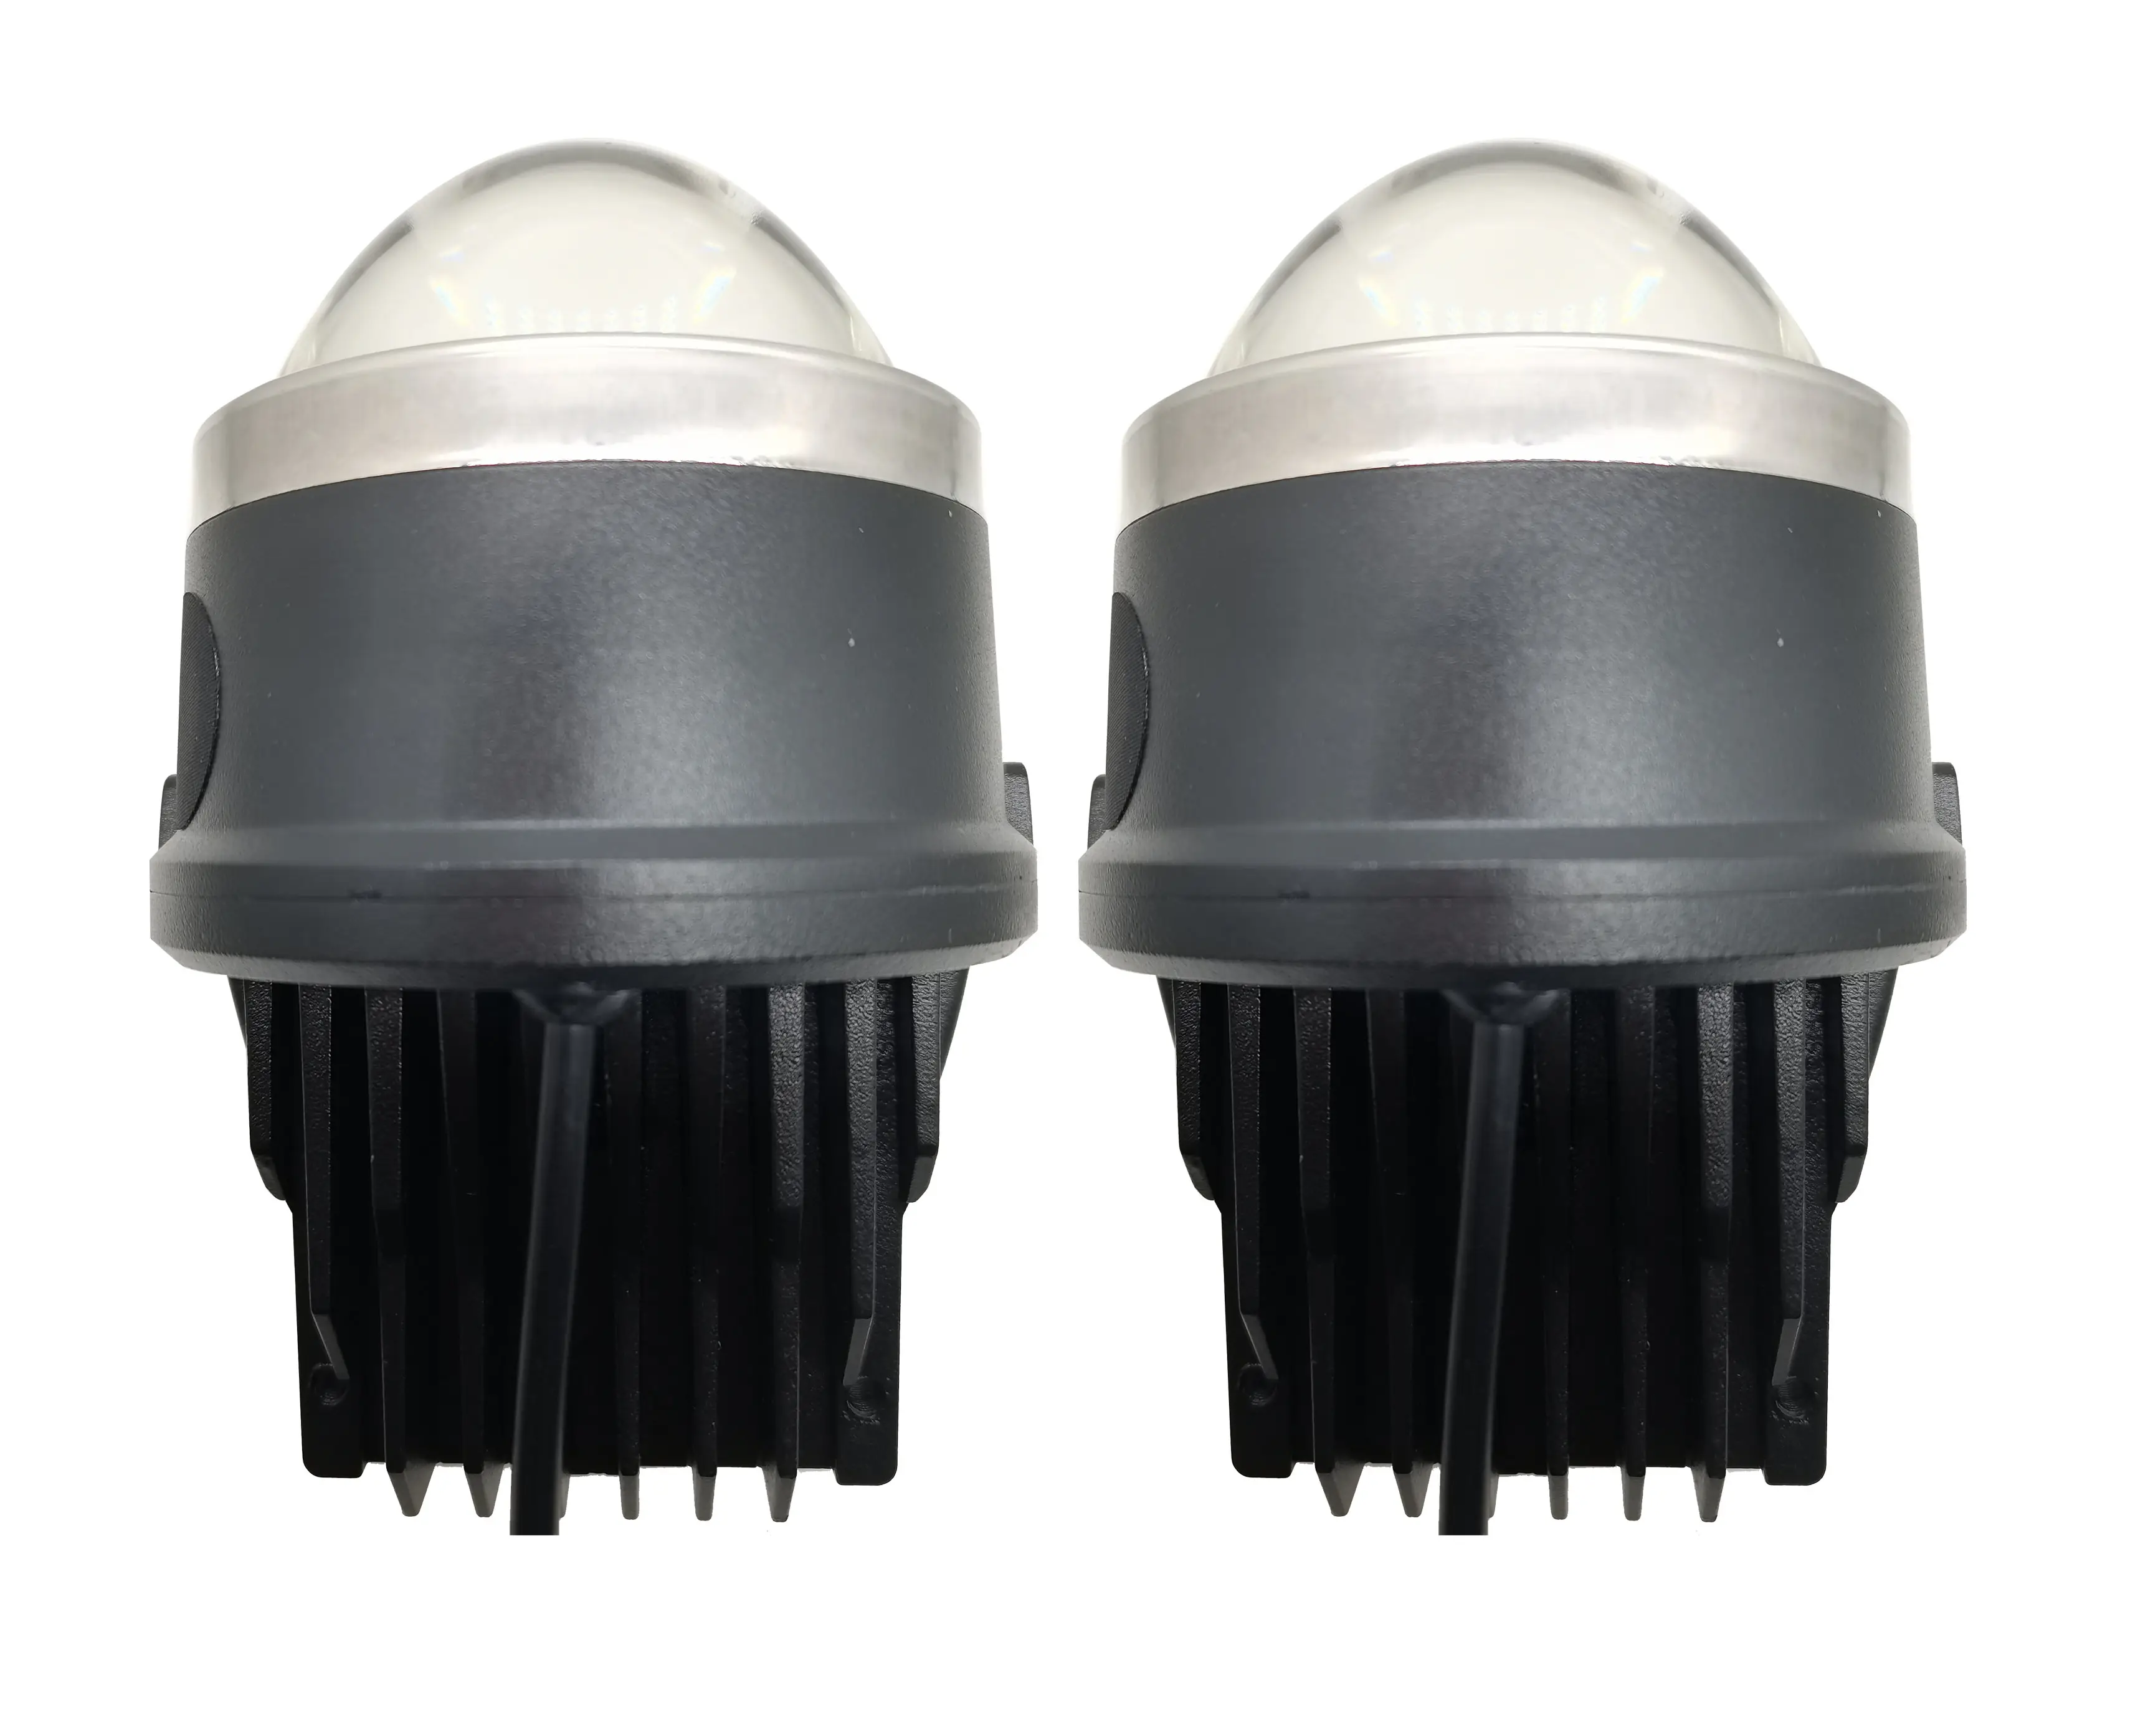 Oem Odm Manufacturers Hiace Foglight Led Altis Lamp Bohlam Vios Gen Pentair Foglamp Hella Car Modified Led Headlight For Rav4